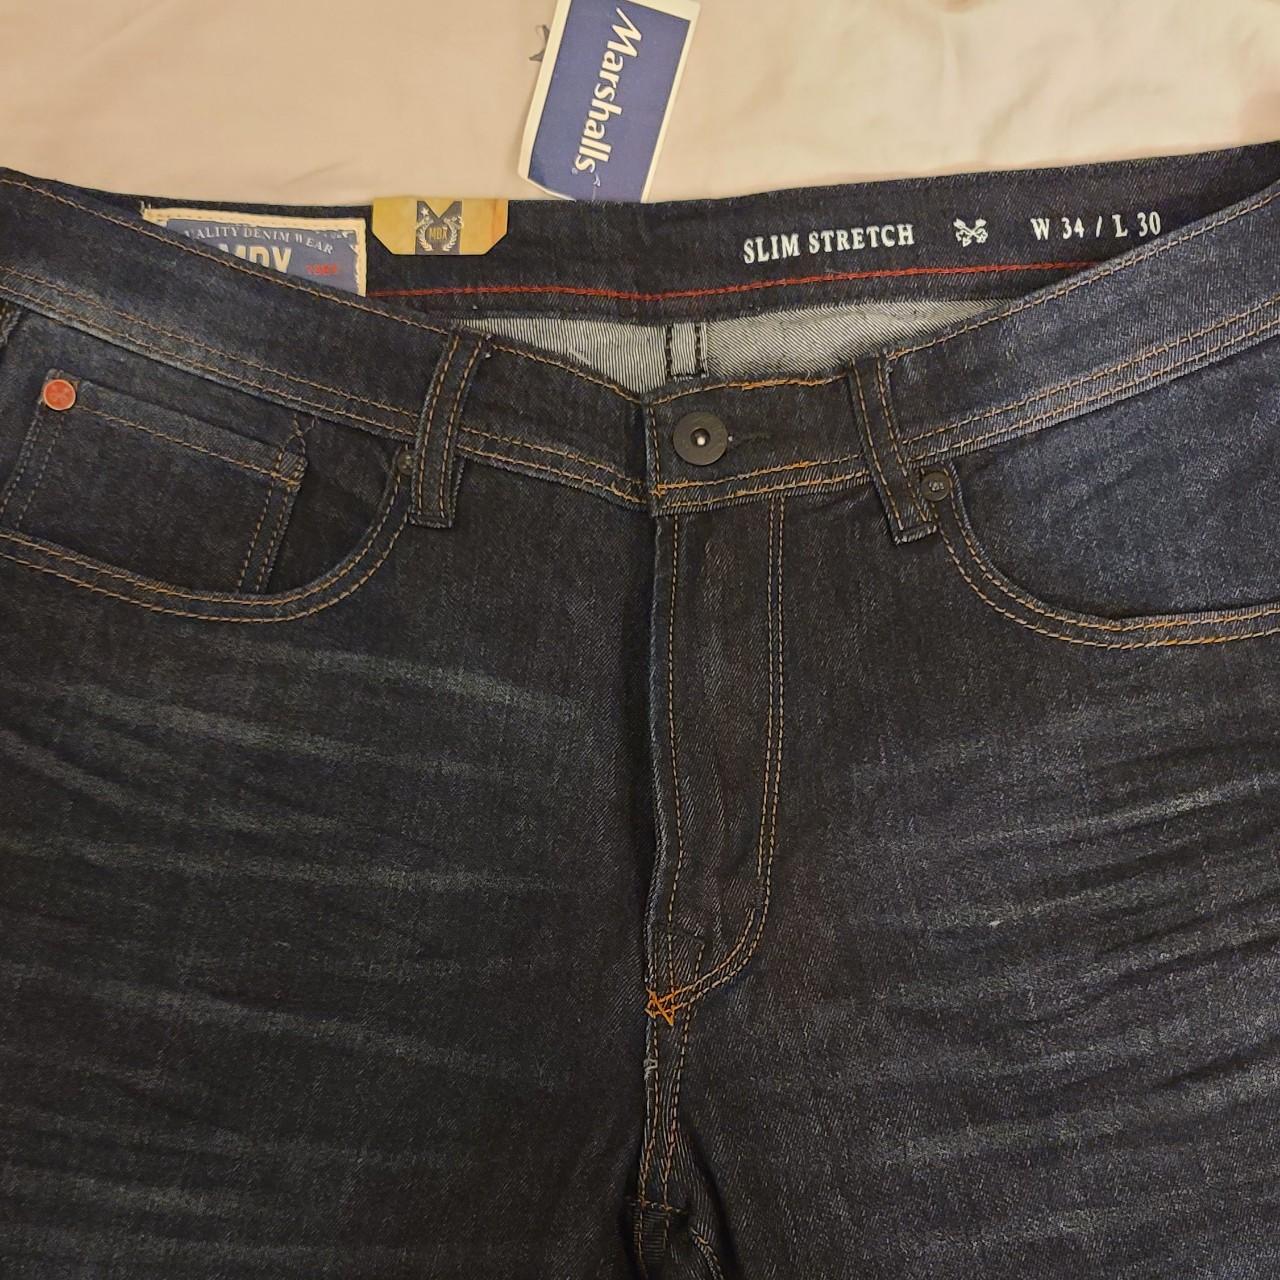 Mbx Jeans Slim Stretch W 34l 30 Brand New Random Depop 